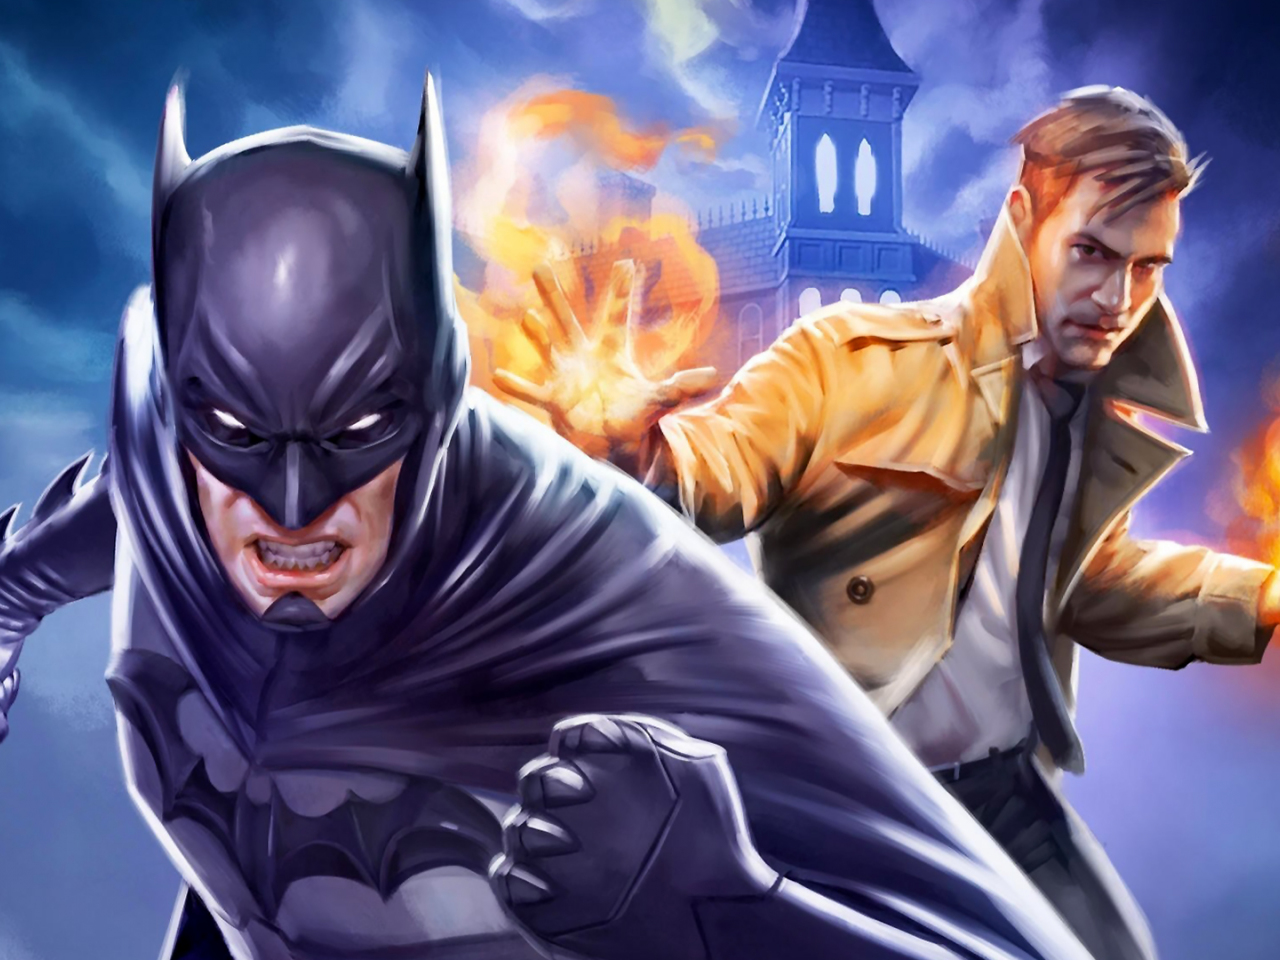 Download 1280x960 Wallpaper Justice League Dark Animated Movie, Batman,  Constantine, Standard 4:3, Fullscreen, 1280x960 Hd Image, Background, 10820